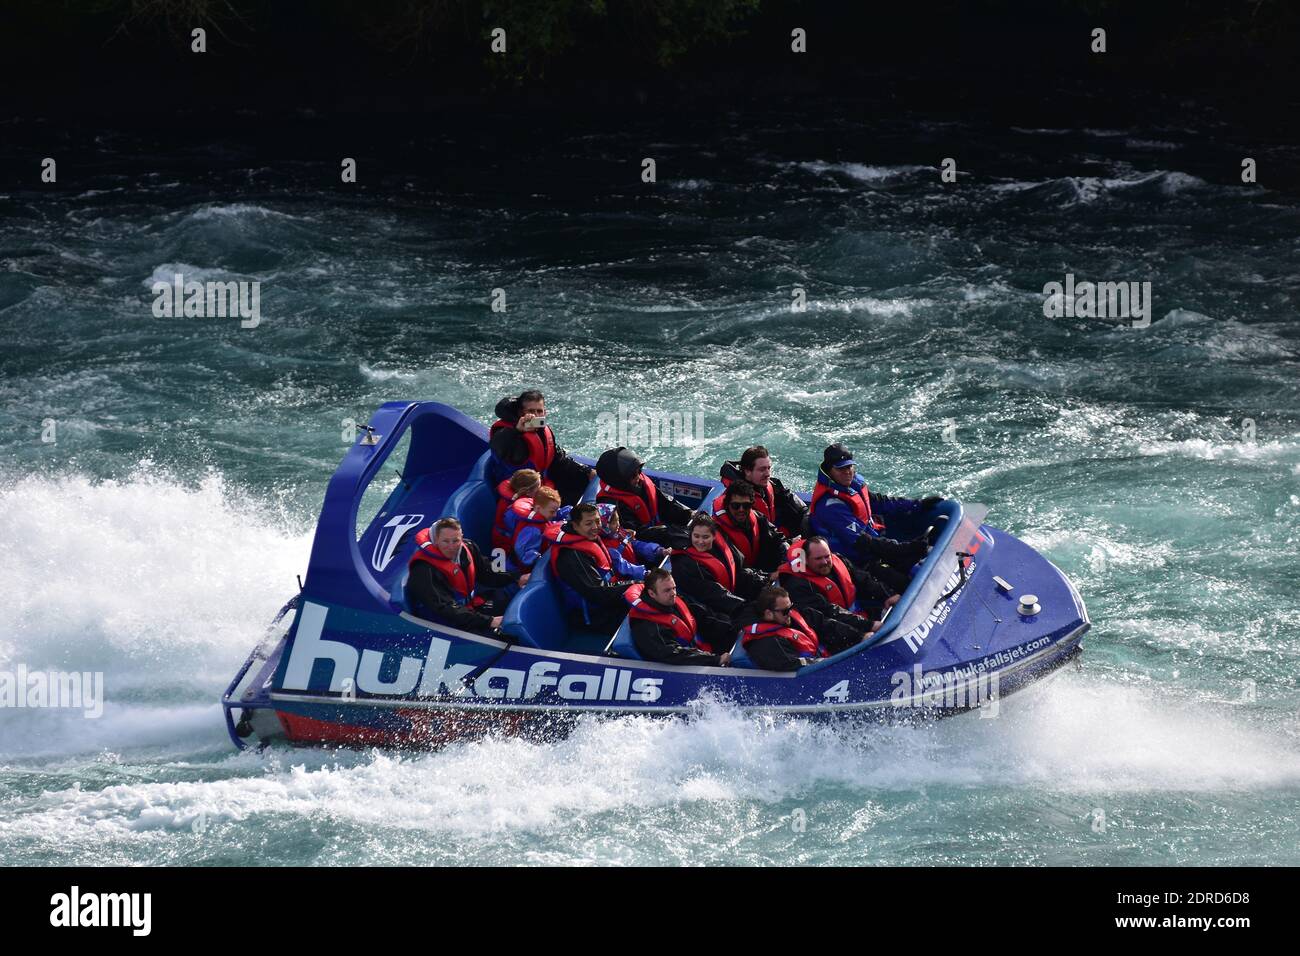 Huka Falls tourist jet boat pacing through rough waters of river. Stock Photo